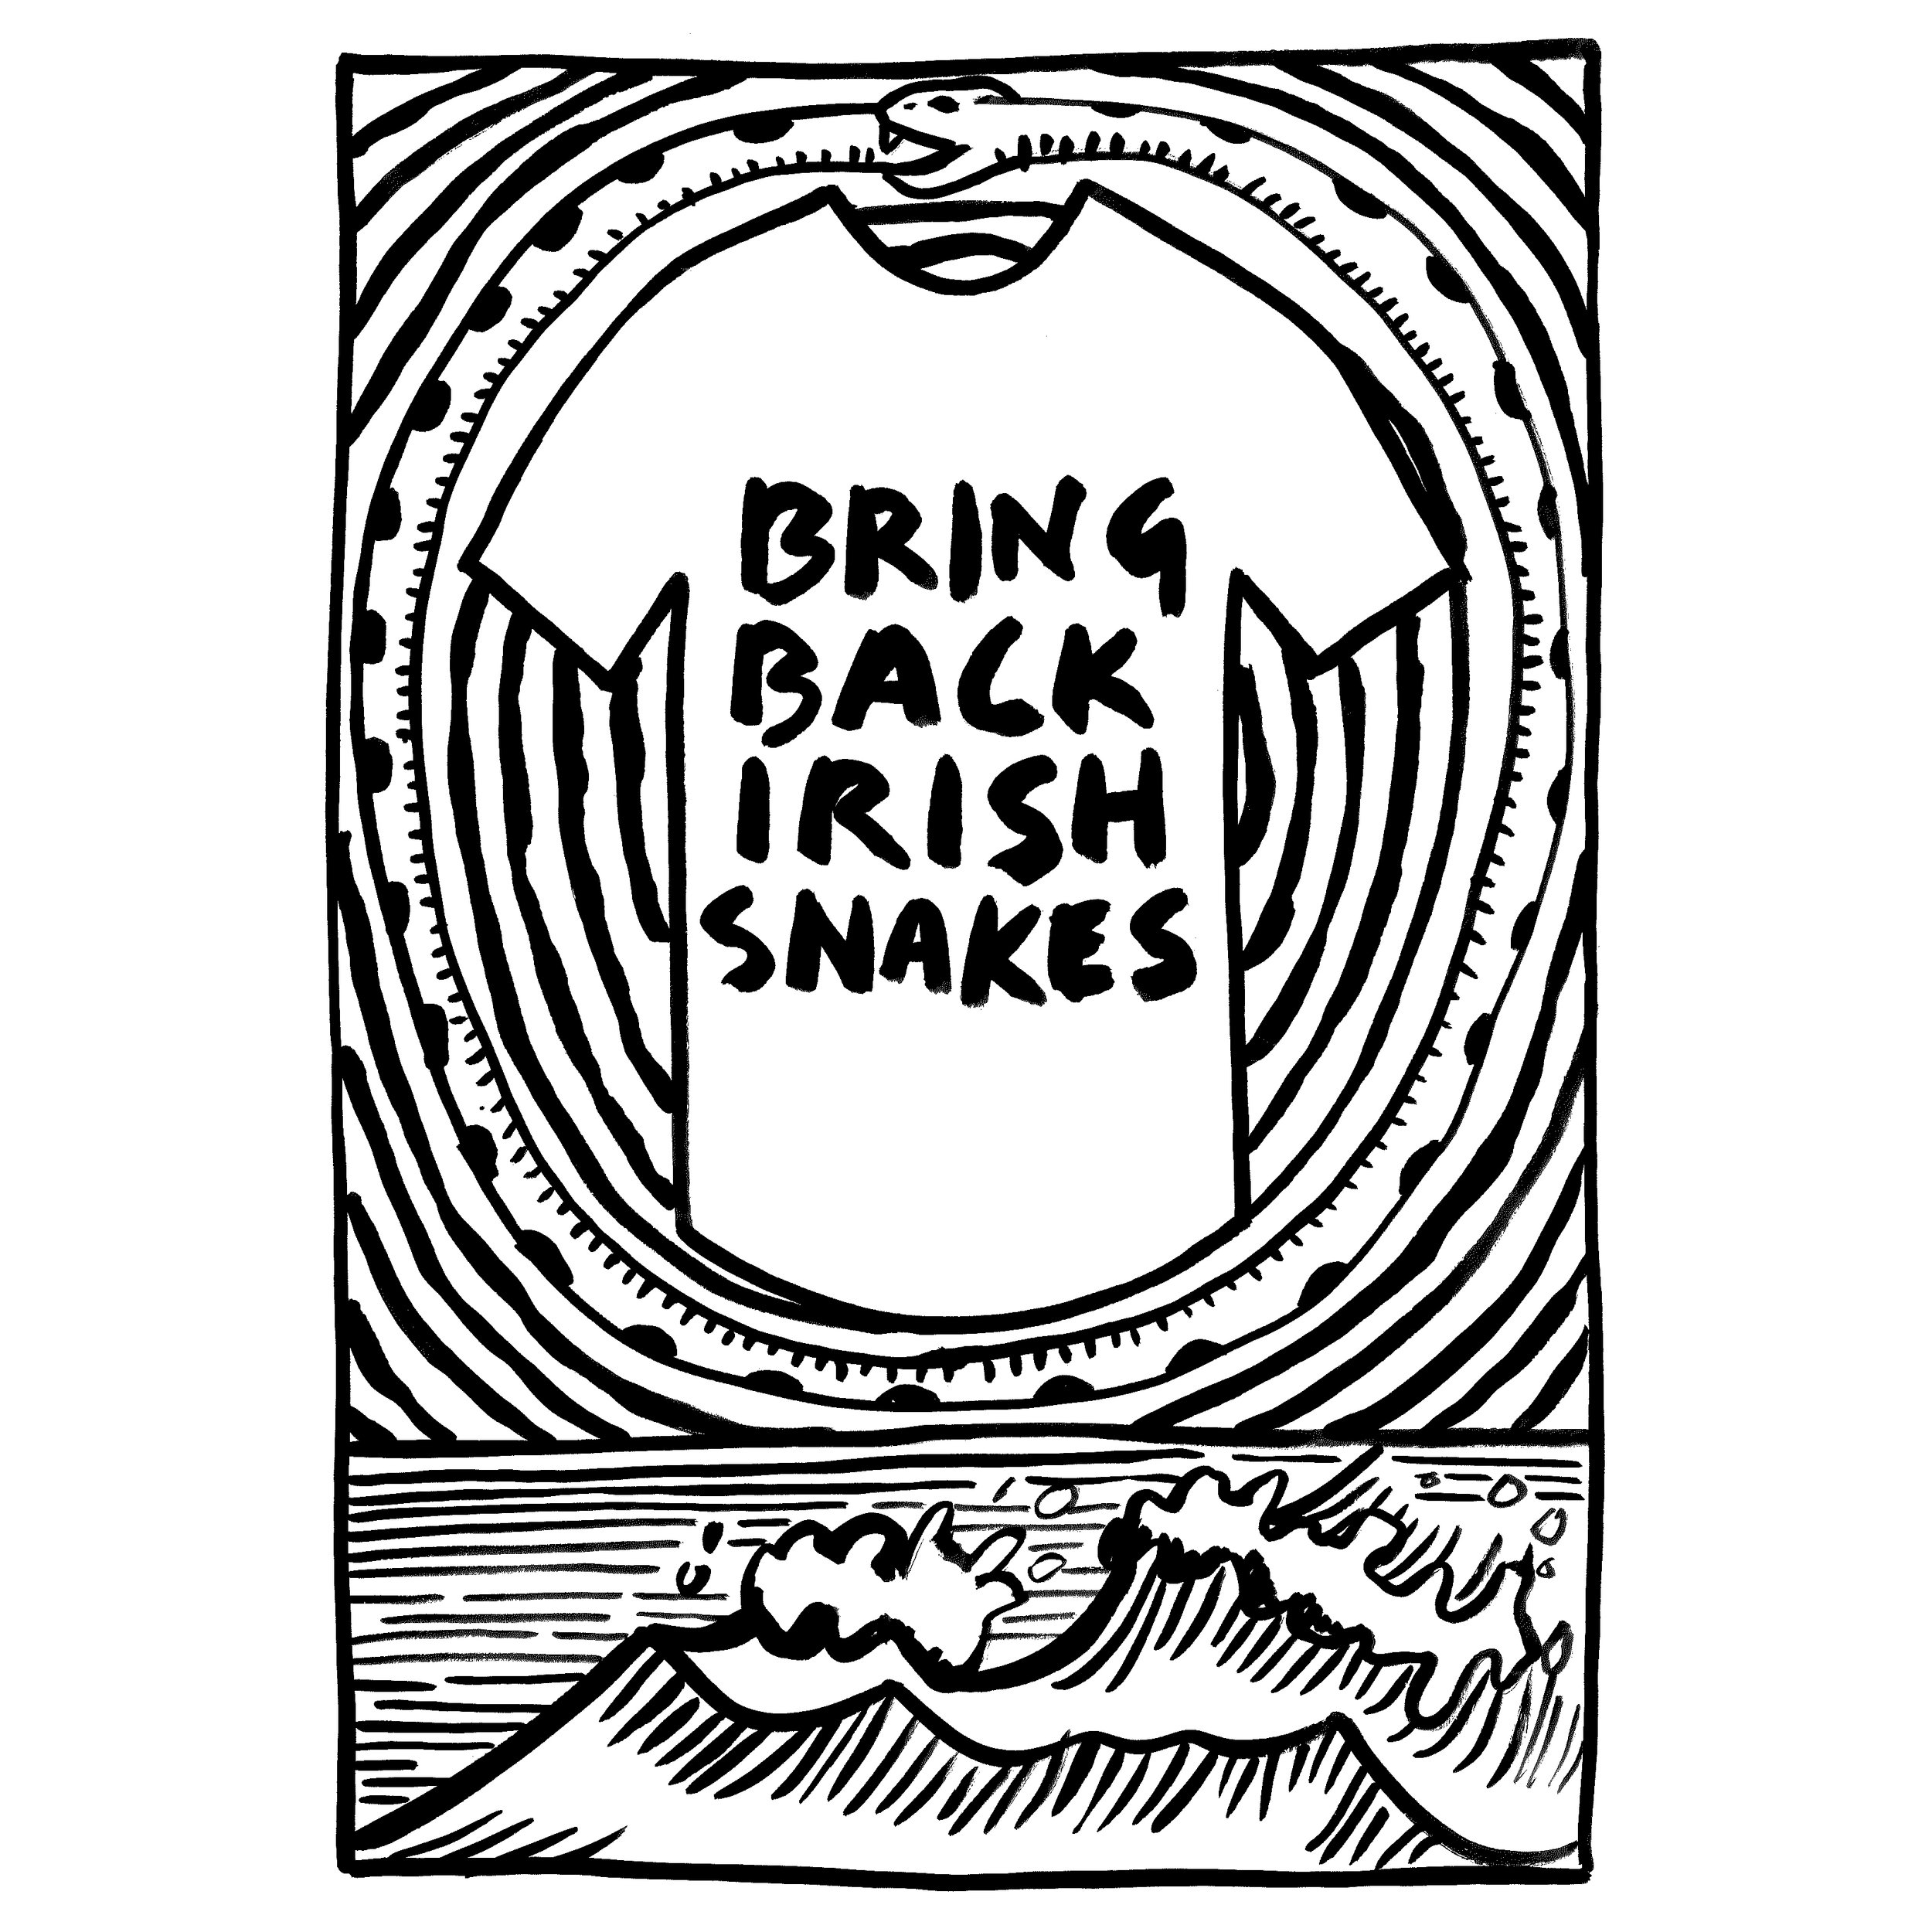 Bring Back Irish Snakes.jpg